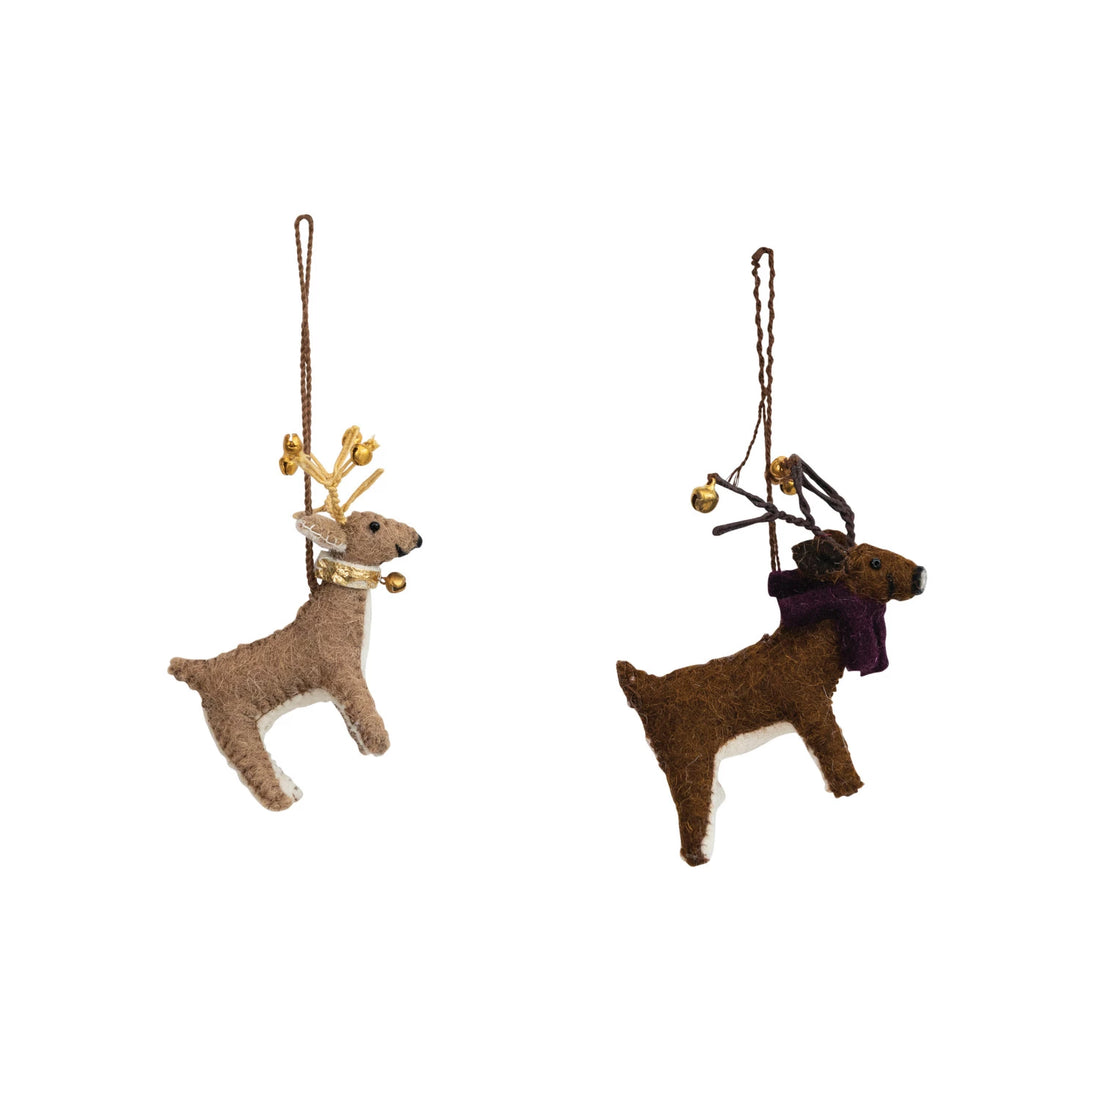 Wool Felt Deer Ornaments, Set of 2